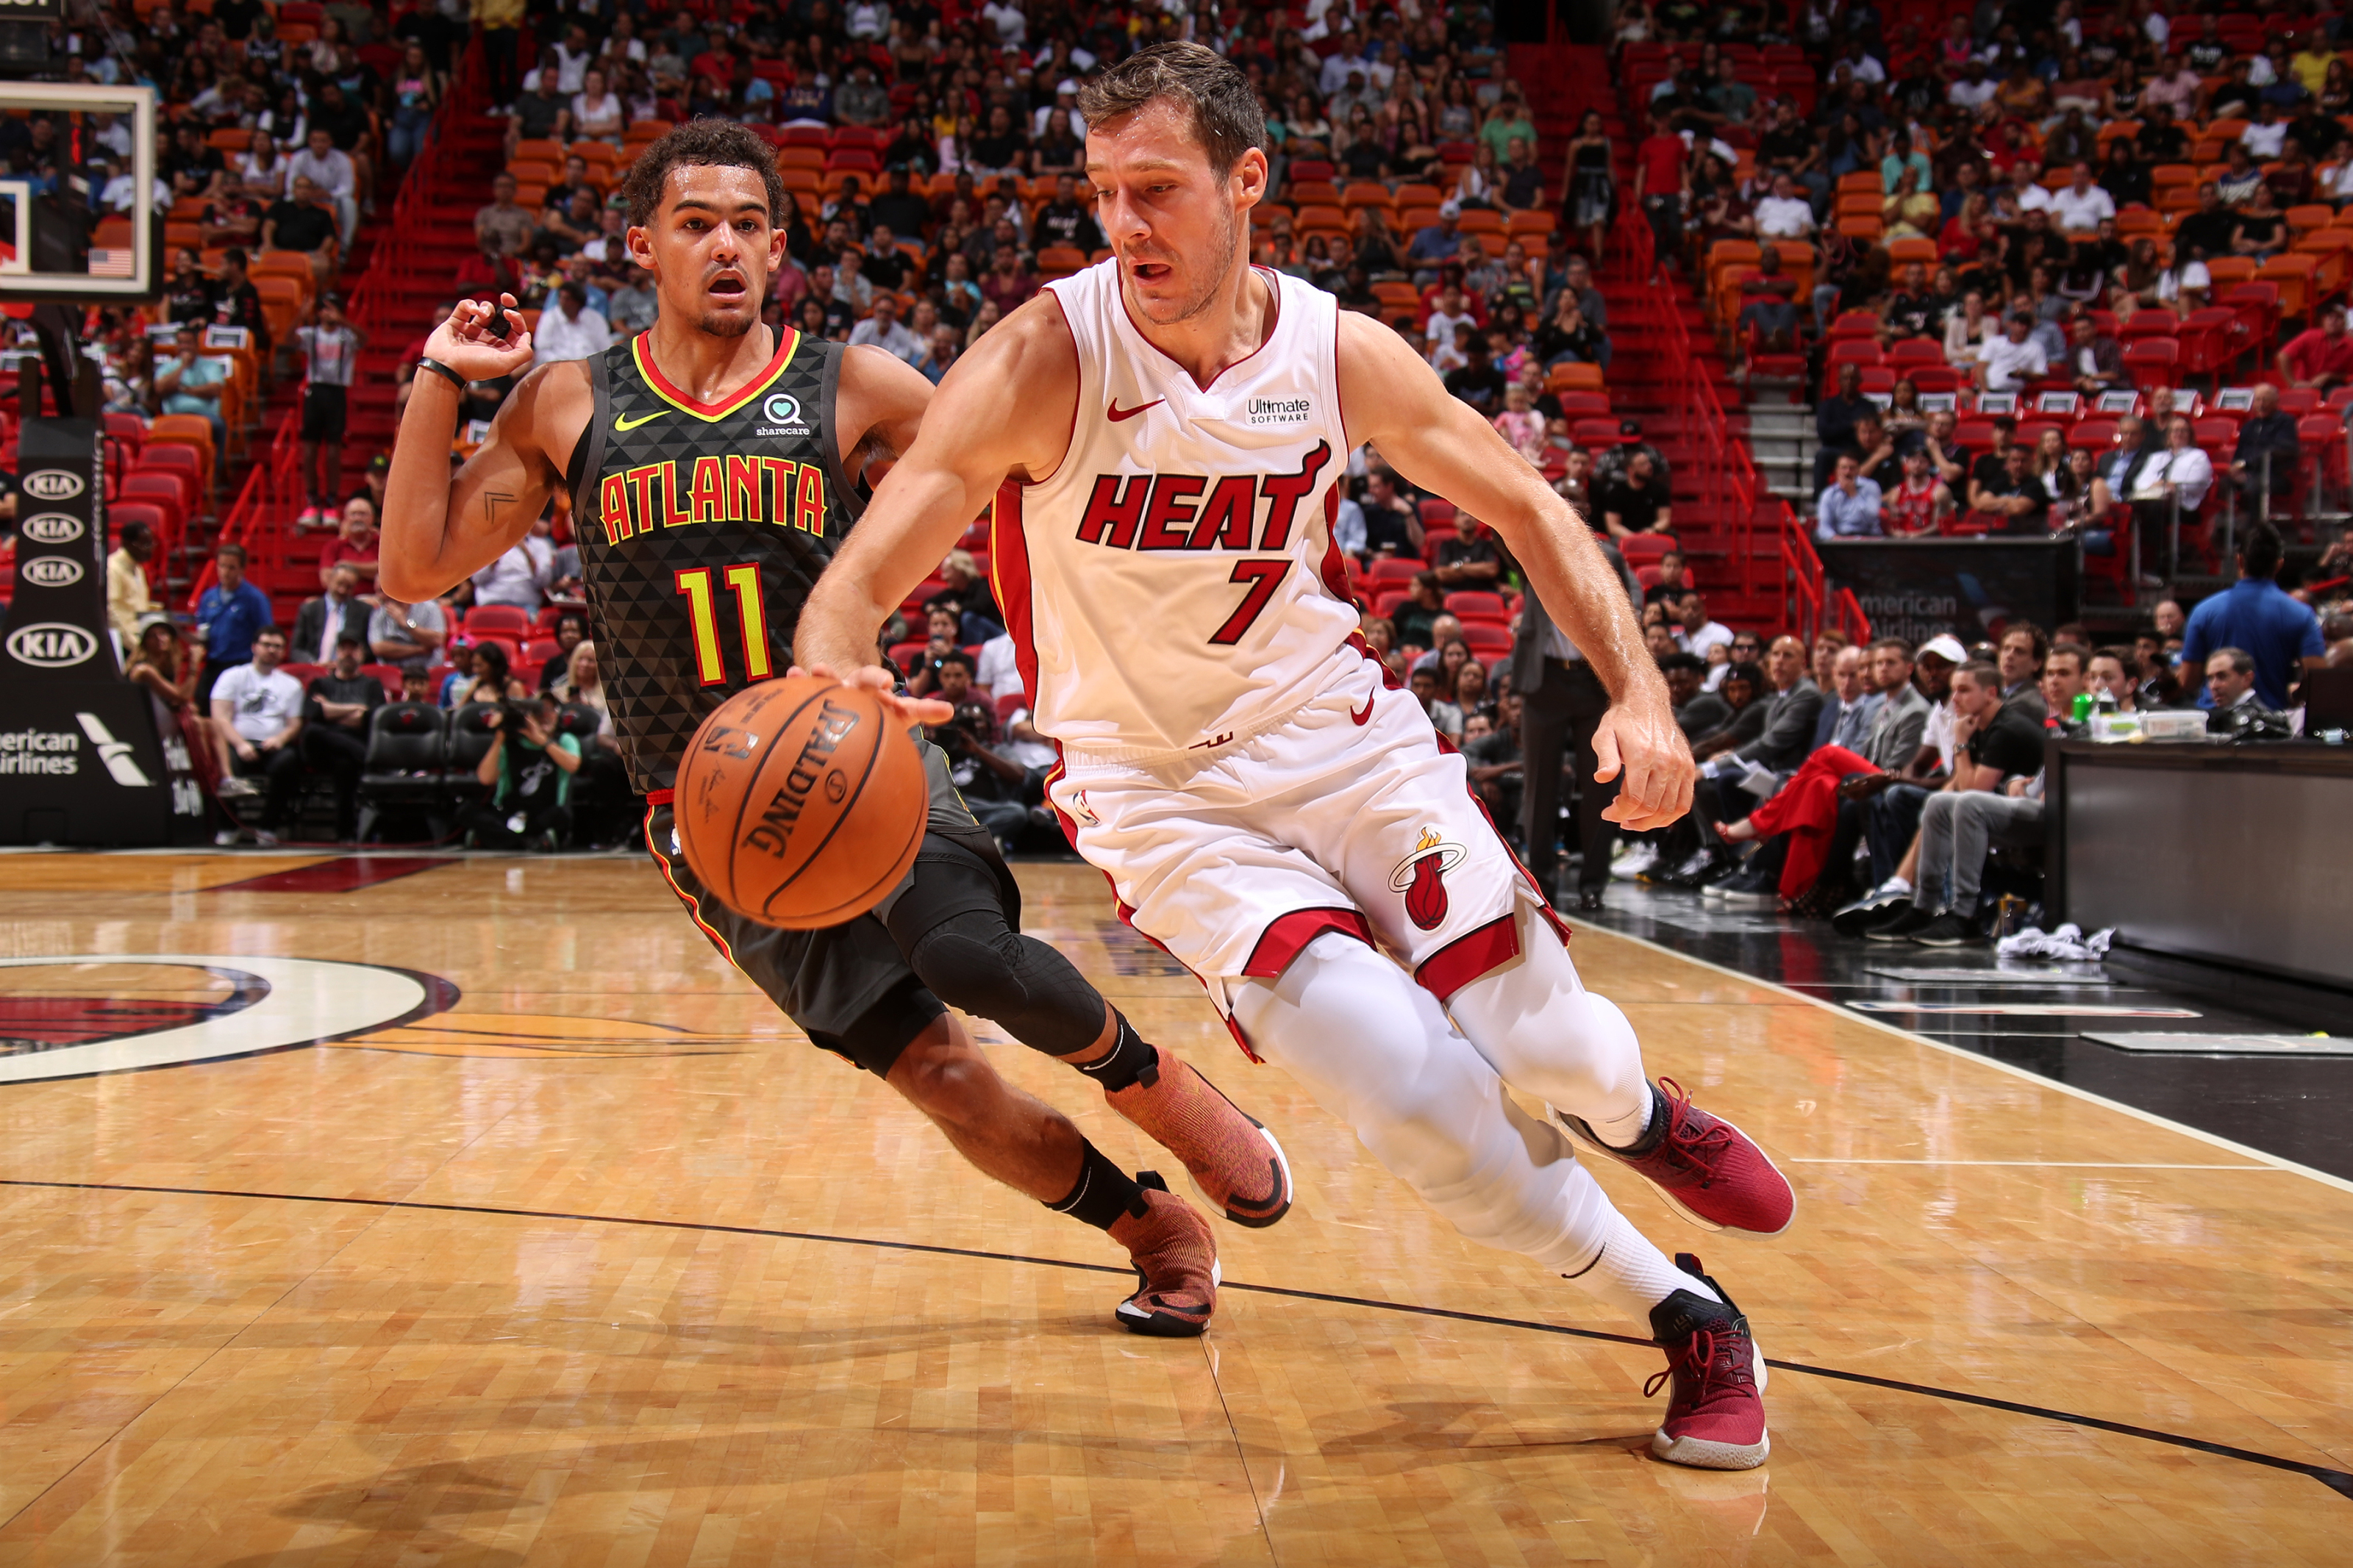 Miami Heat: Goran Dragic career comes full circle - Sports Illustrated